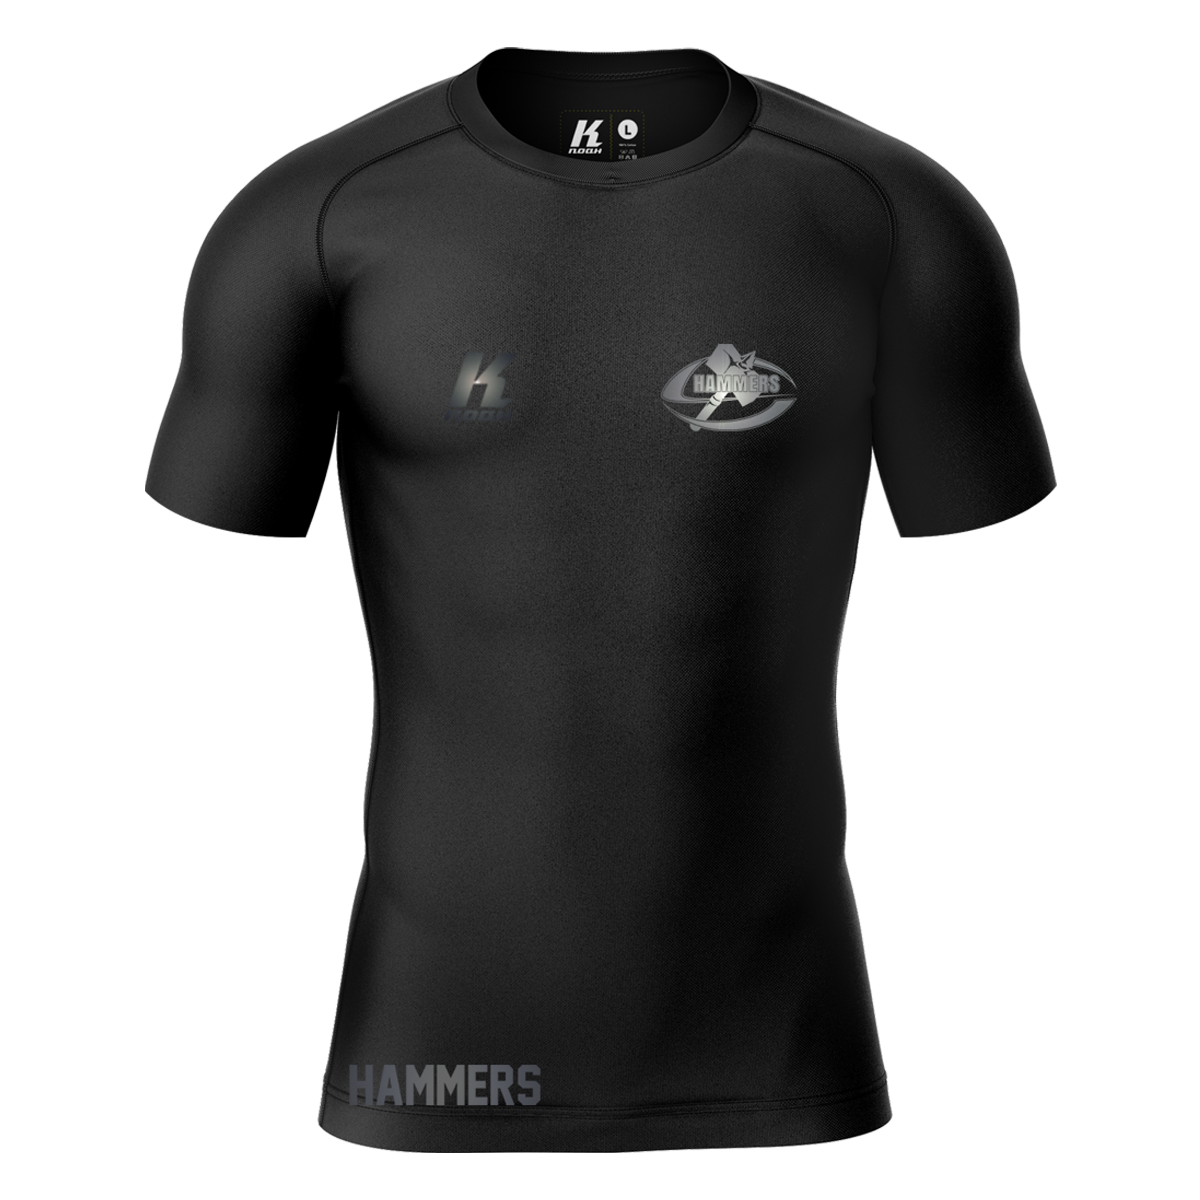 S-Hammers "Blackline" K.Tech Compression Shortsleeve Shirt